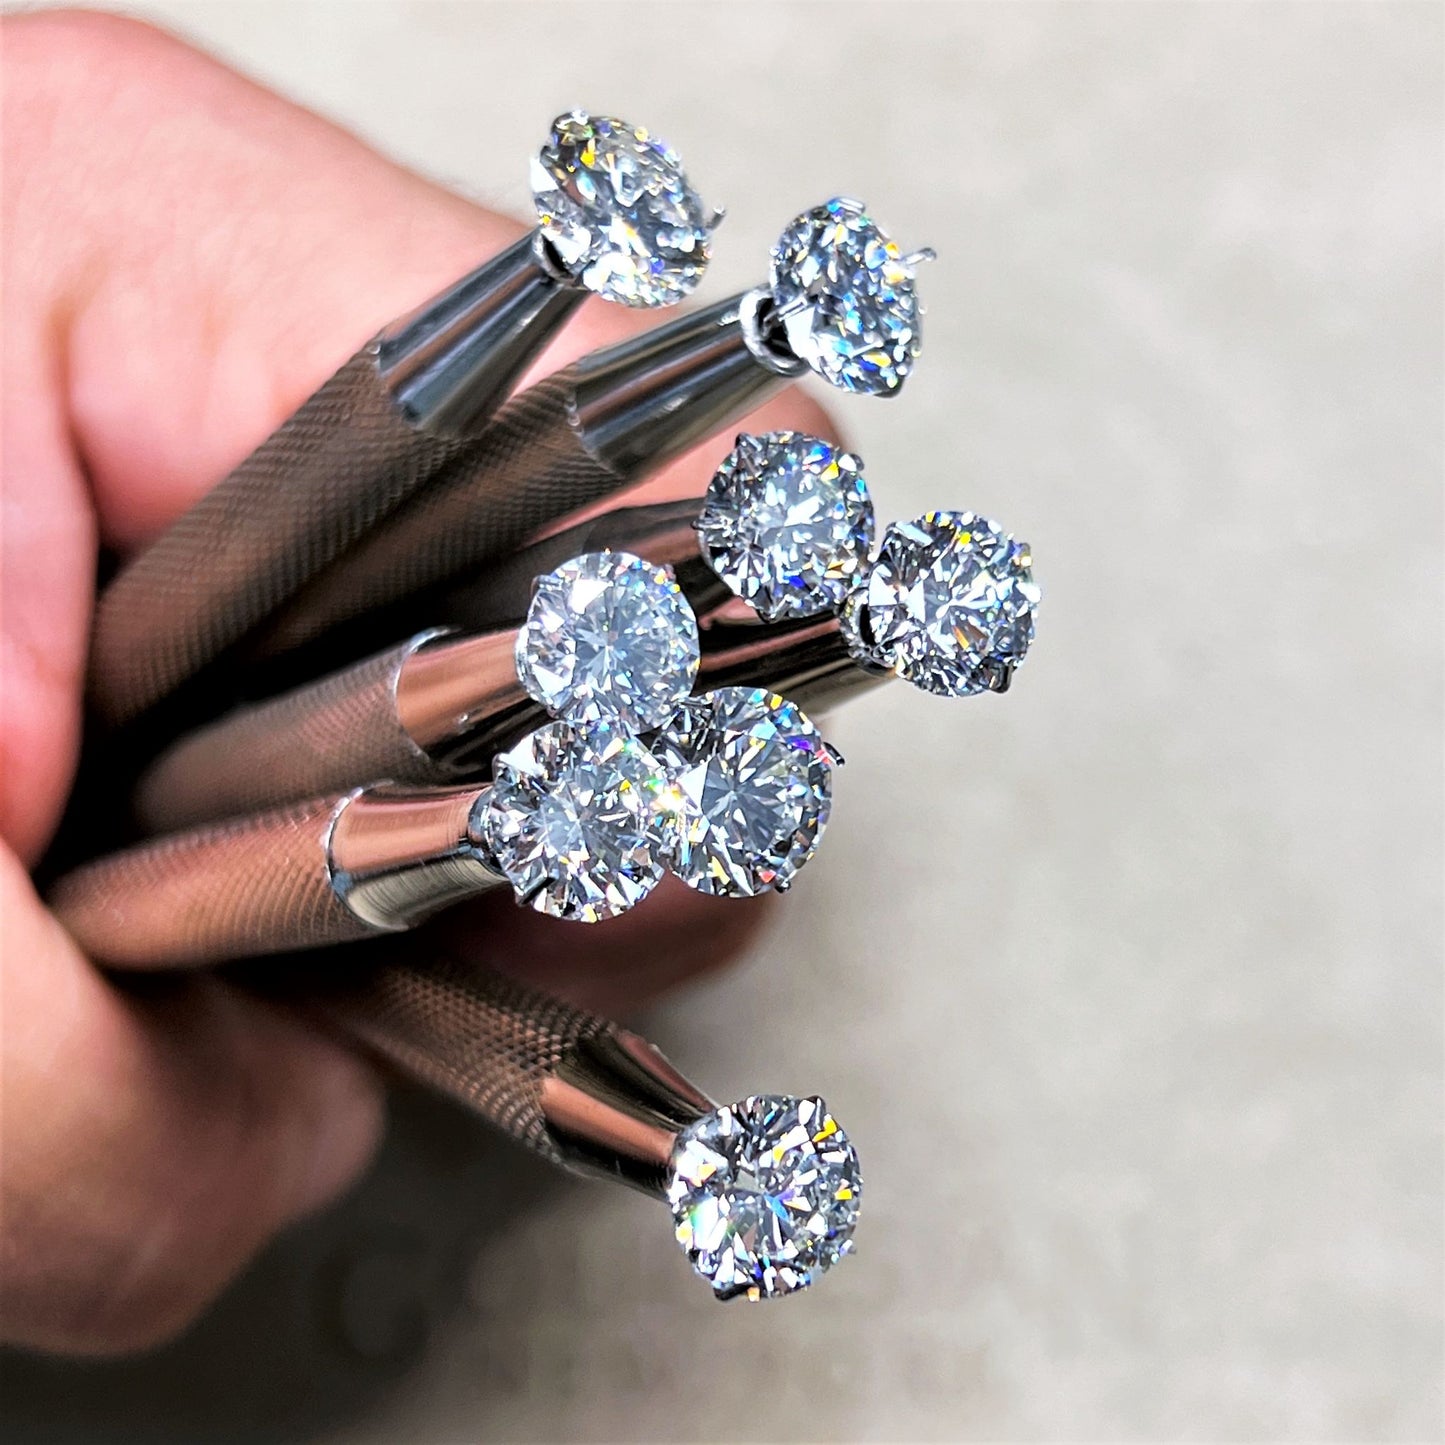 Diamond or Custom Jewelry Design Consultation